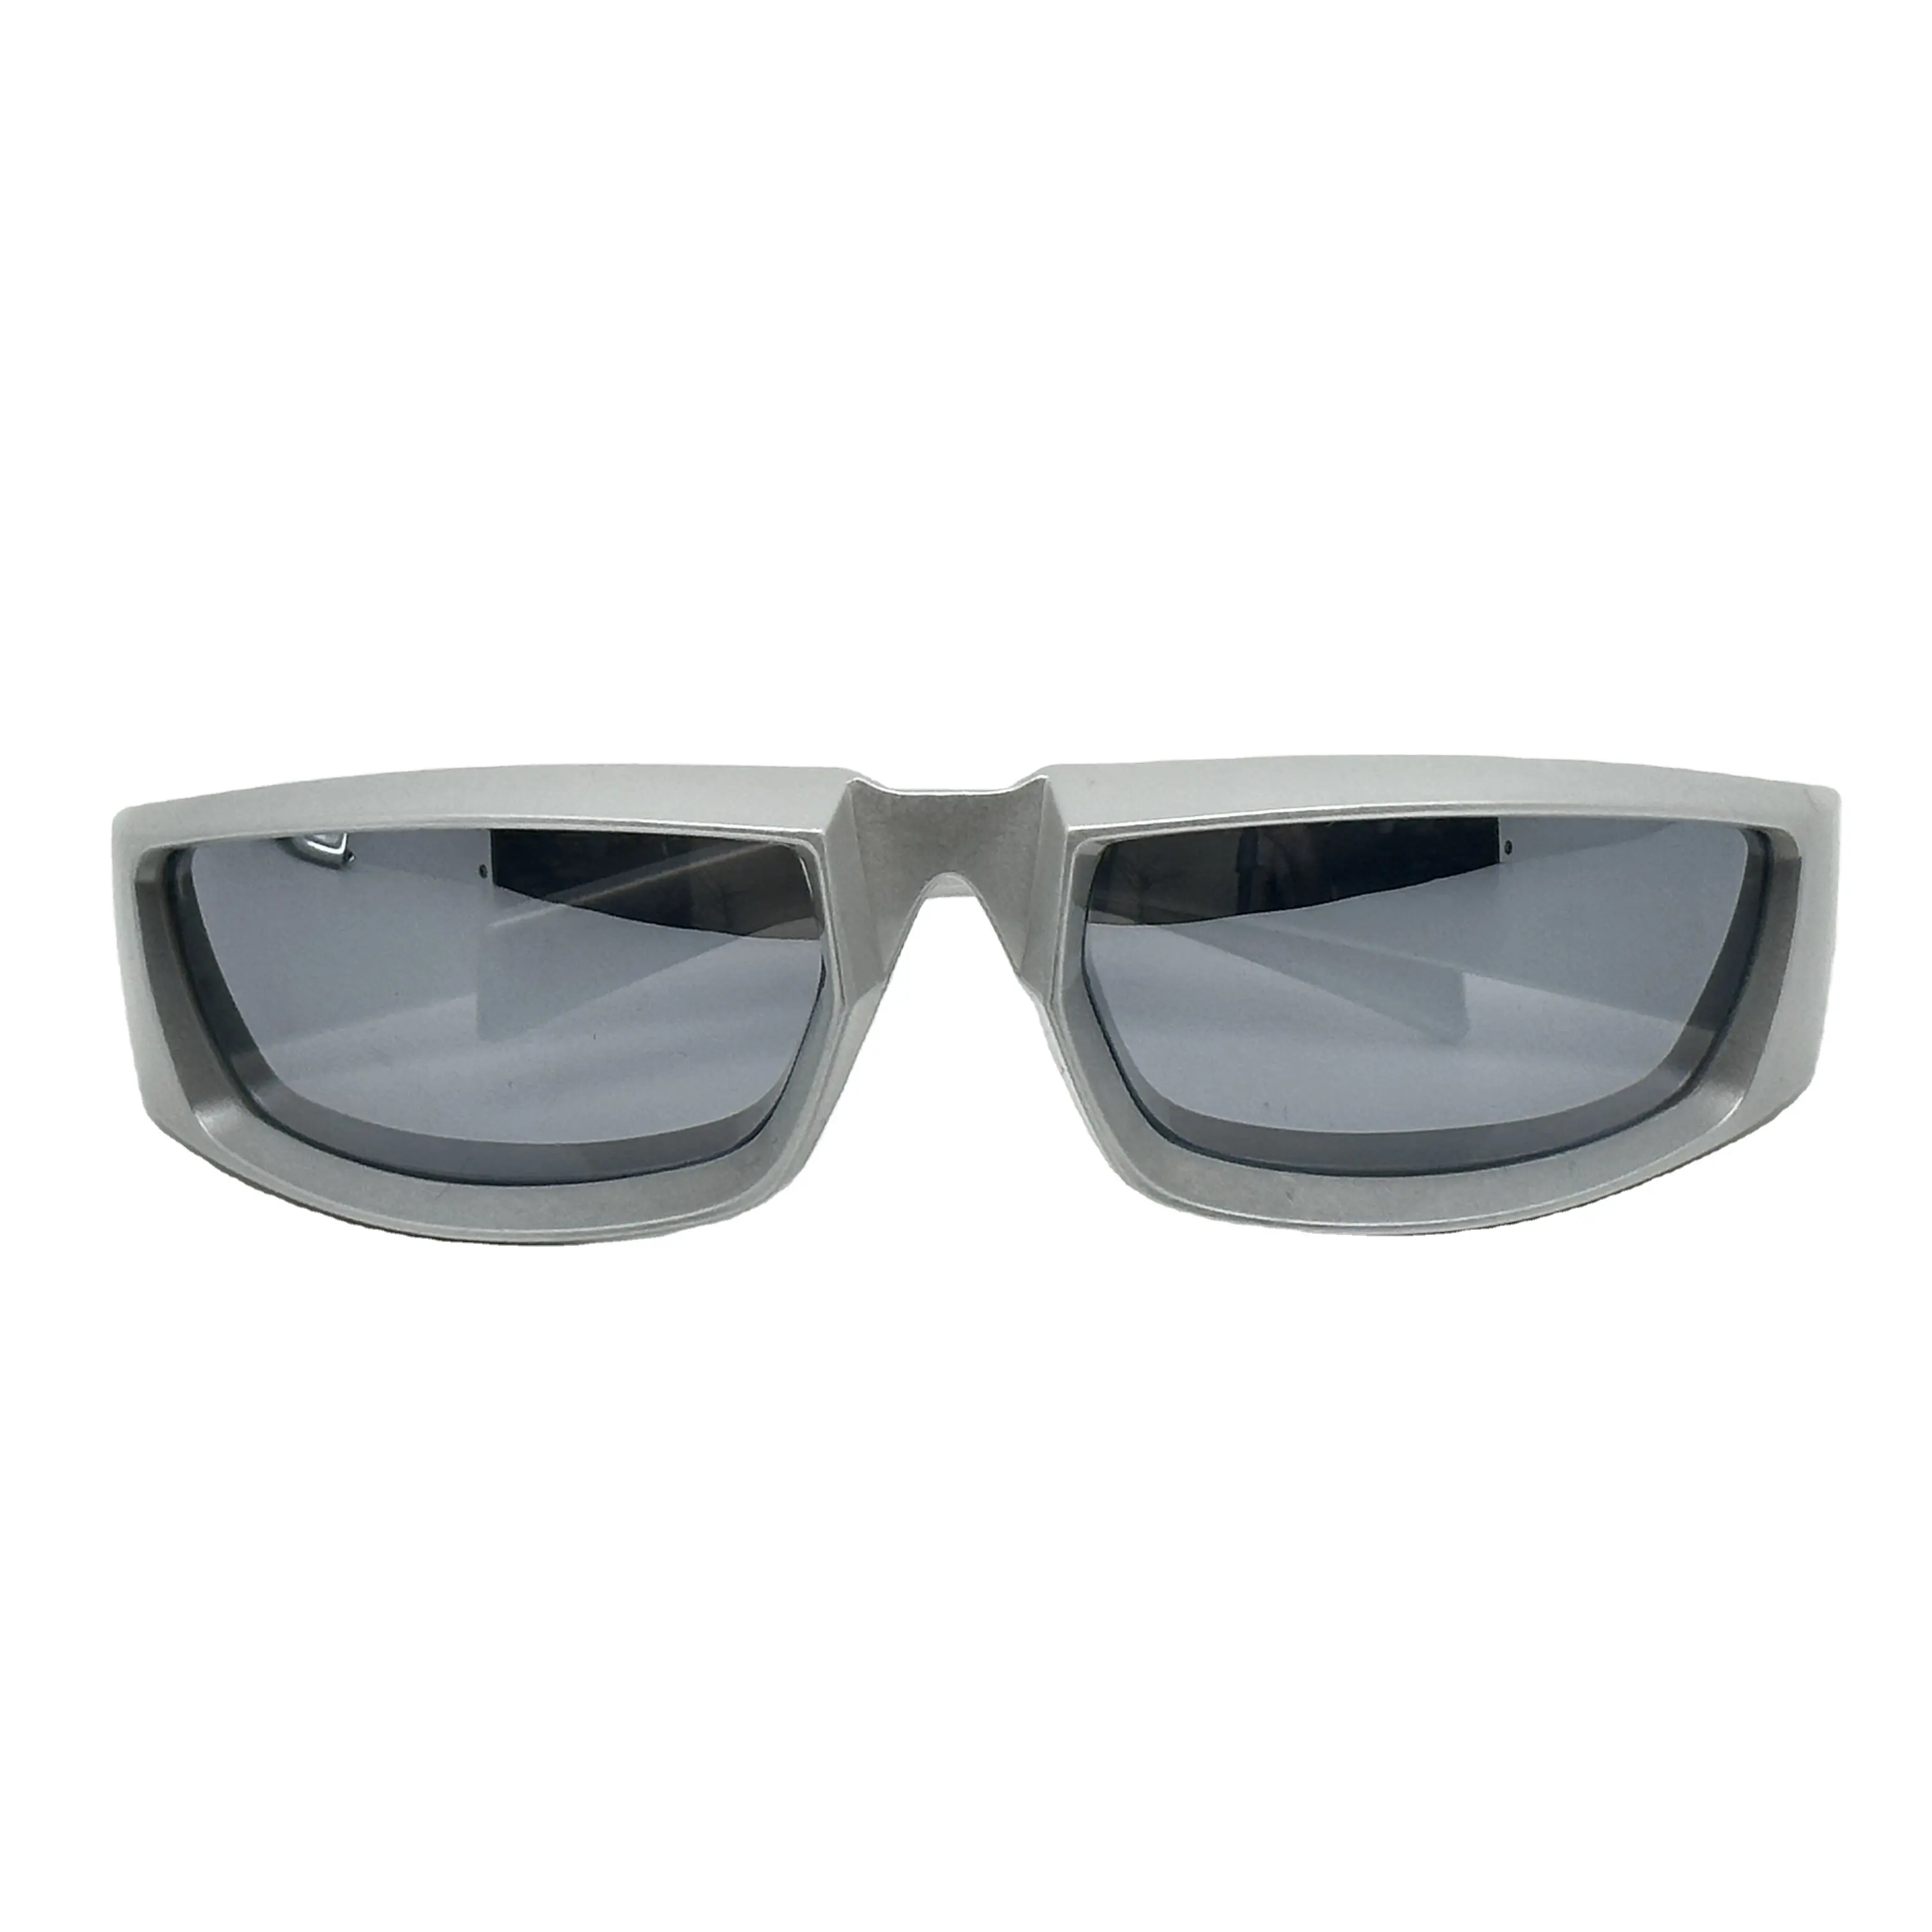 New Personalized Sunglasses Future Technology Super Cool Trendy Glasses Sunglasses for women